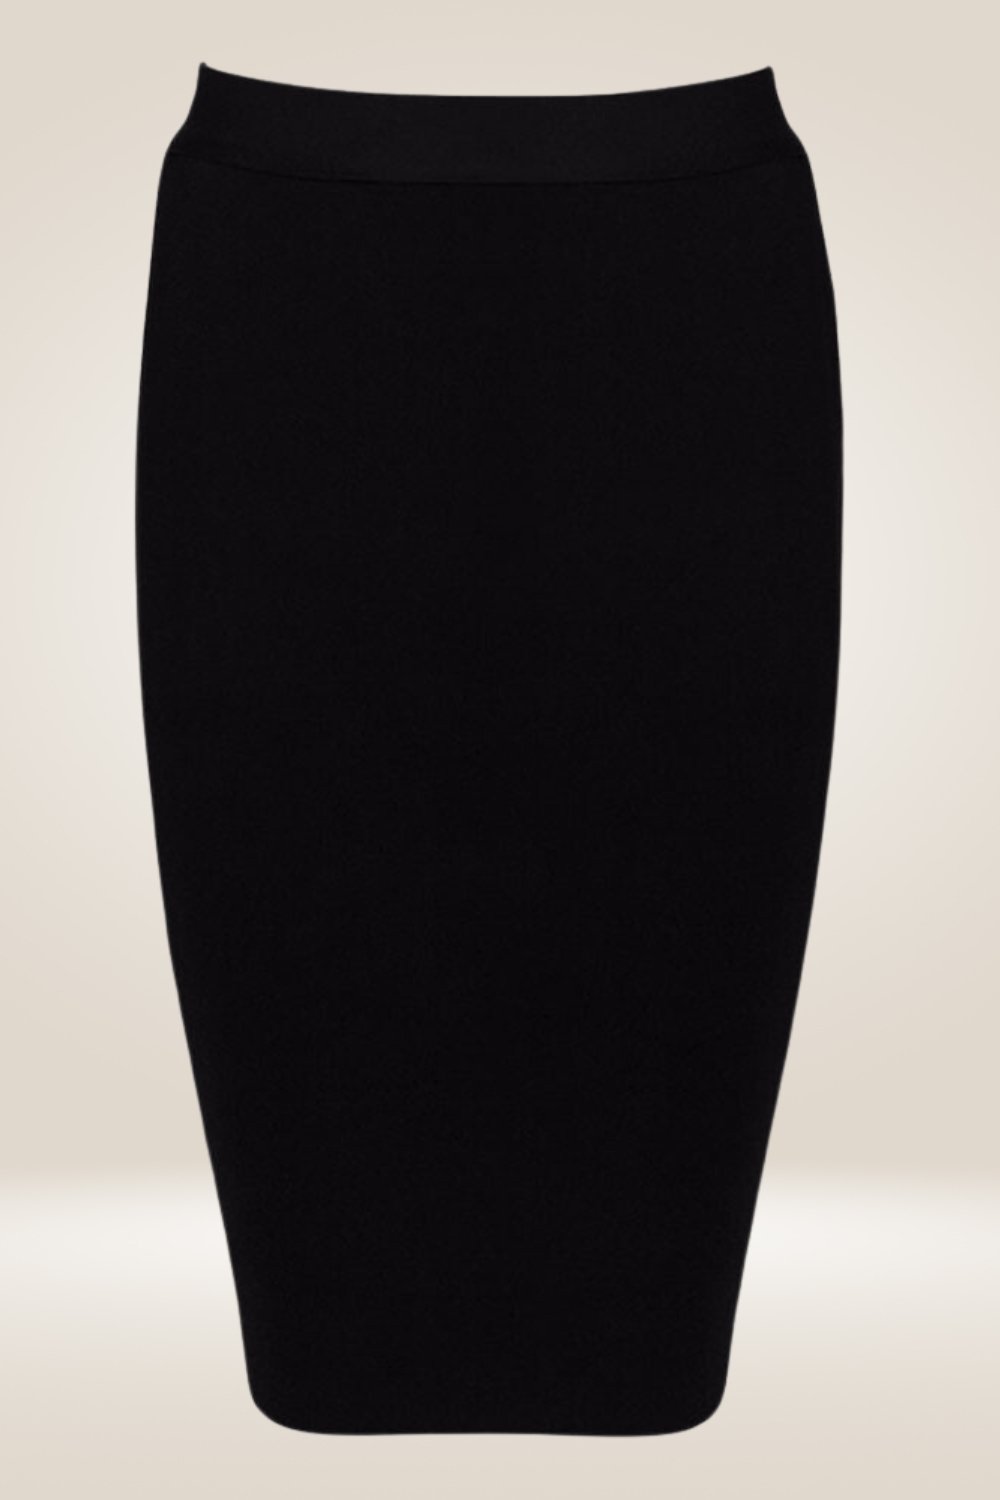 High Waisted Black Pencil Midi Skirt - TGC Boutique - Skirt